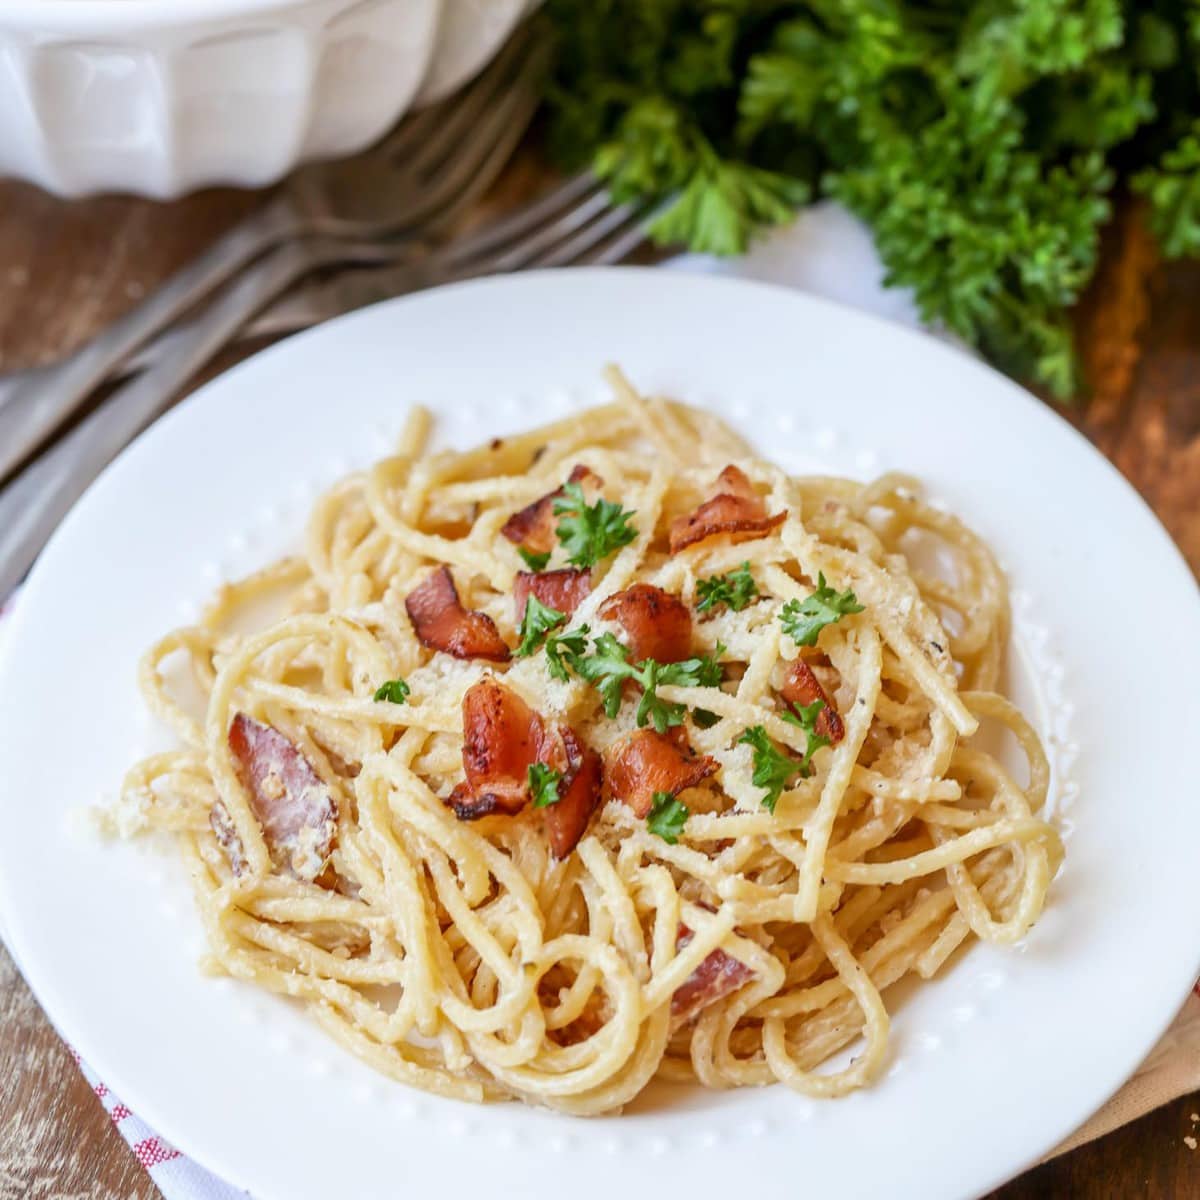 Italian Christmas Dinner ideas - pasta carbonara topped with crisp bacon.